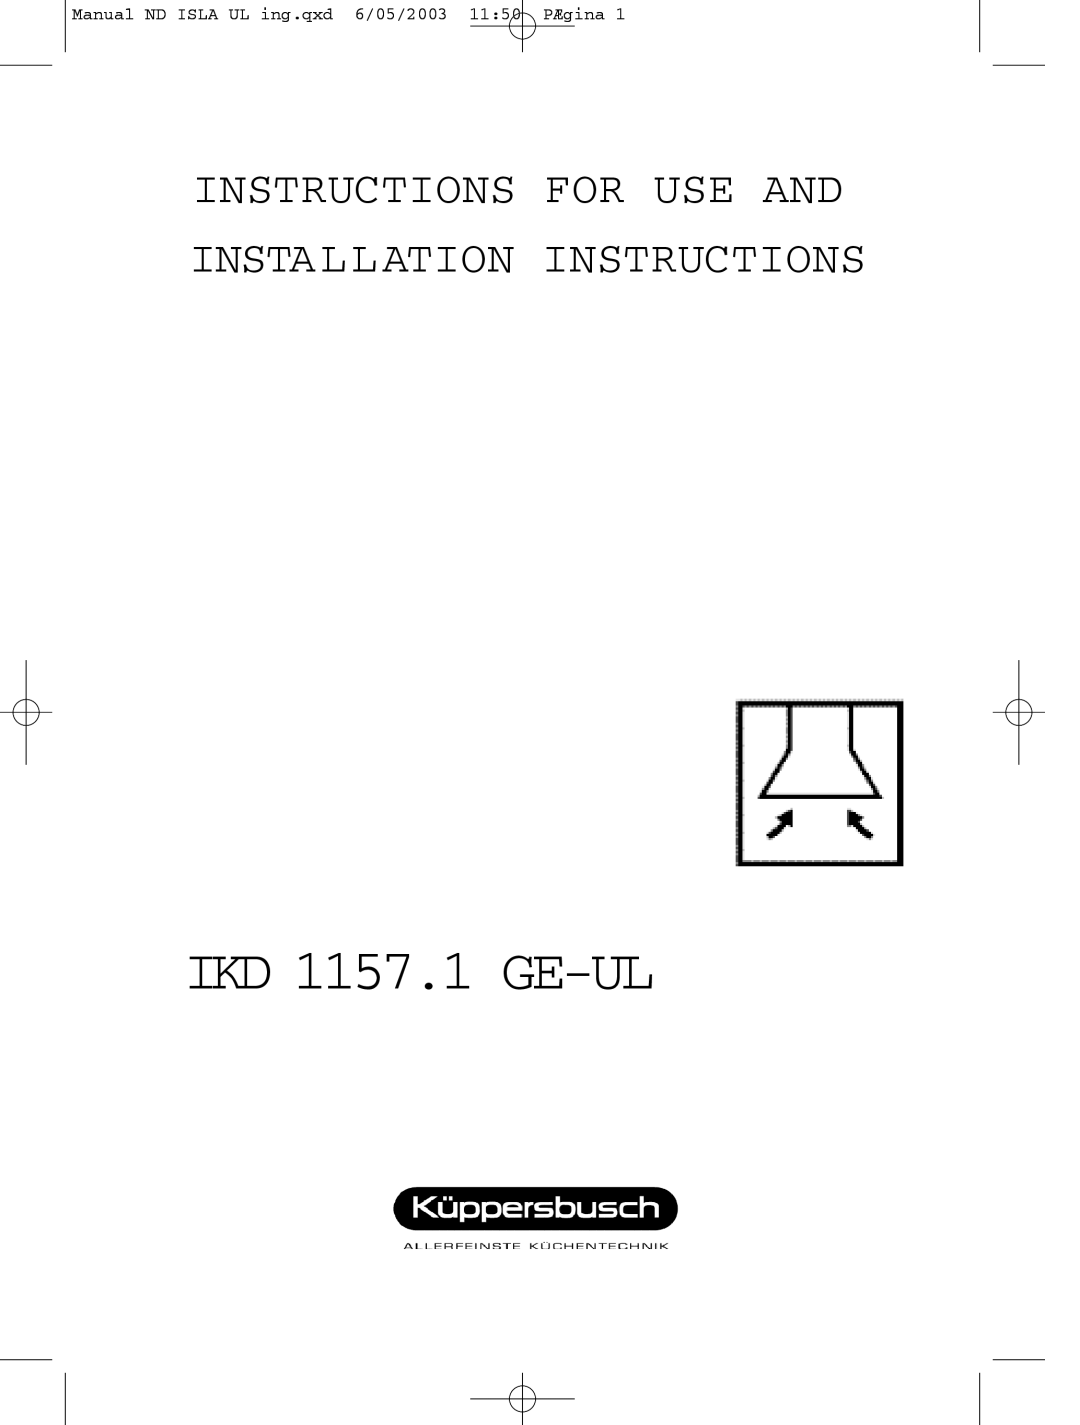 Kuppersbusch USA IKD 1157.1 GE-UL installation instructions Manual ND ISLA UL ing.qxd 6/05/2003 11 50 PÆgina 